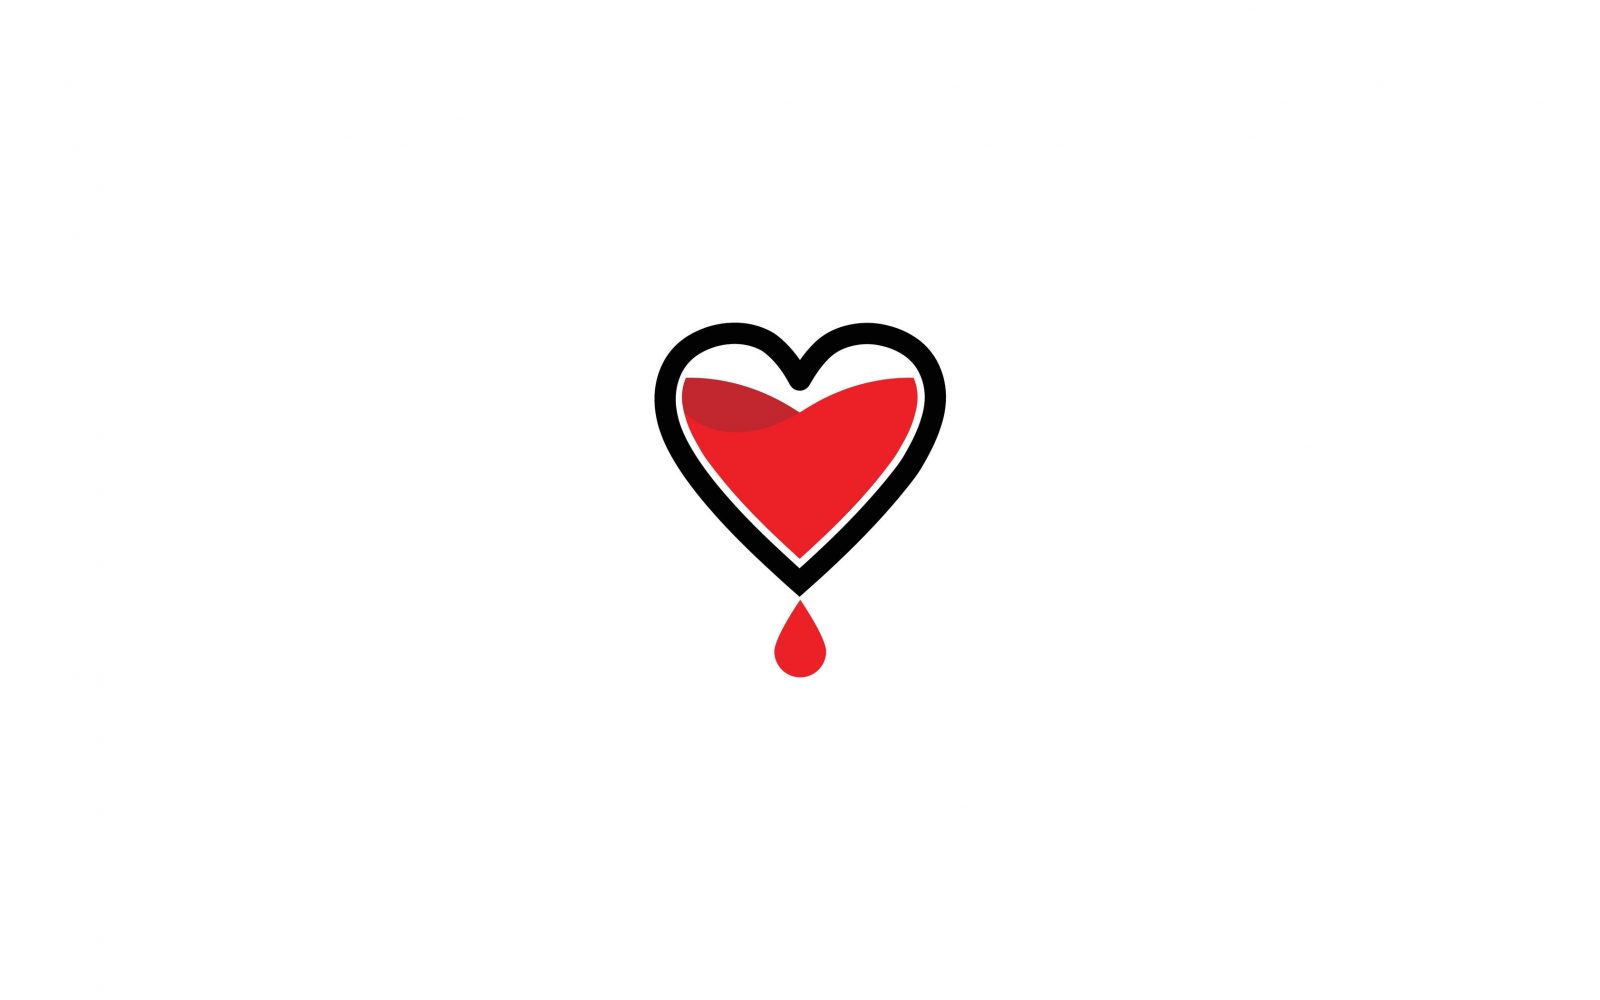 Simbol srca in krvi, ki simbolizira krvodajalstvo